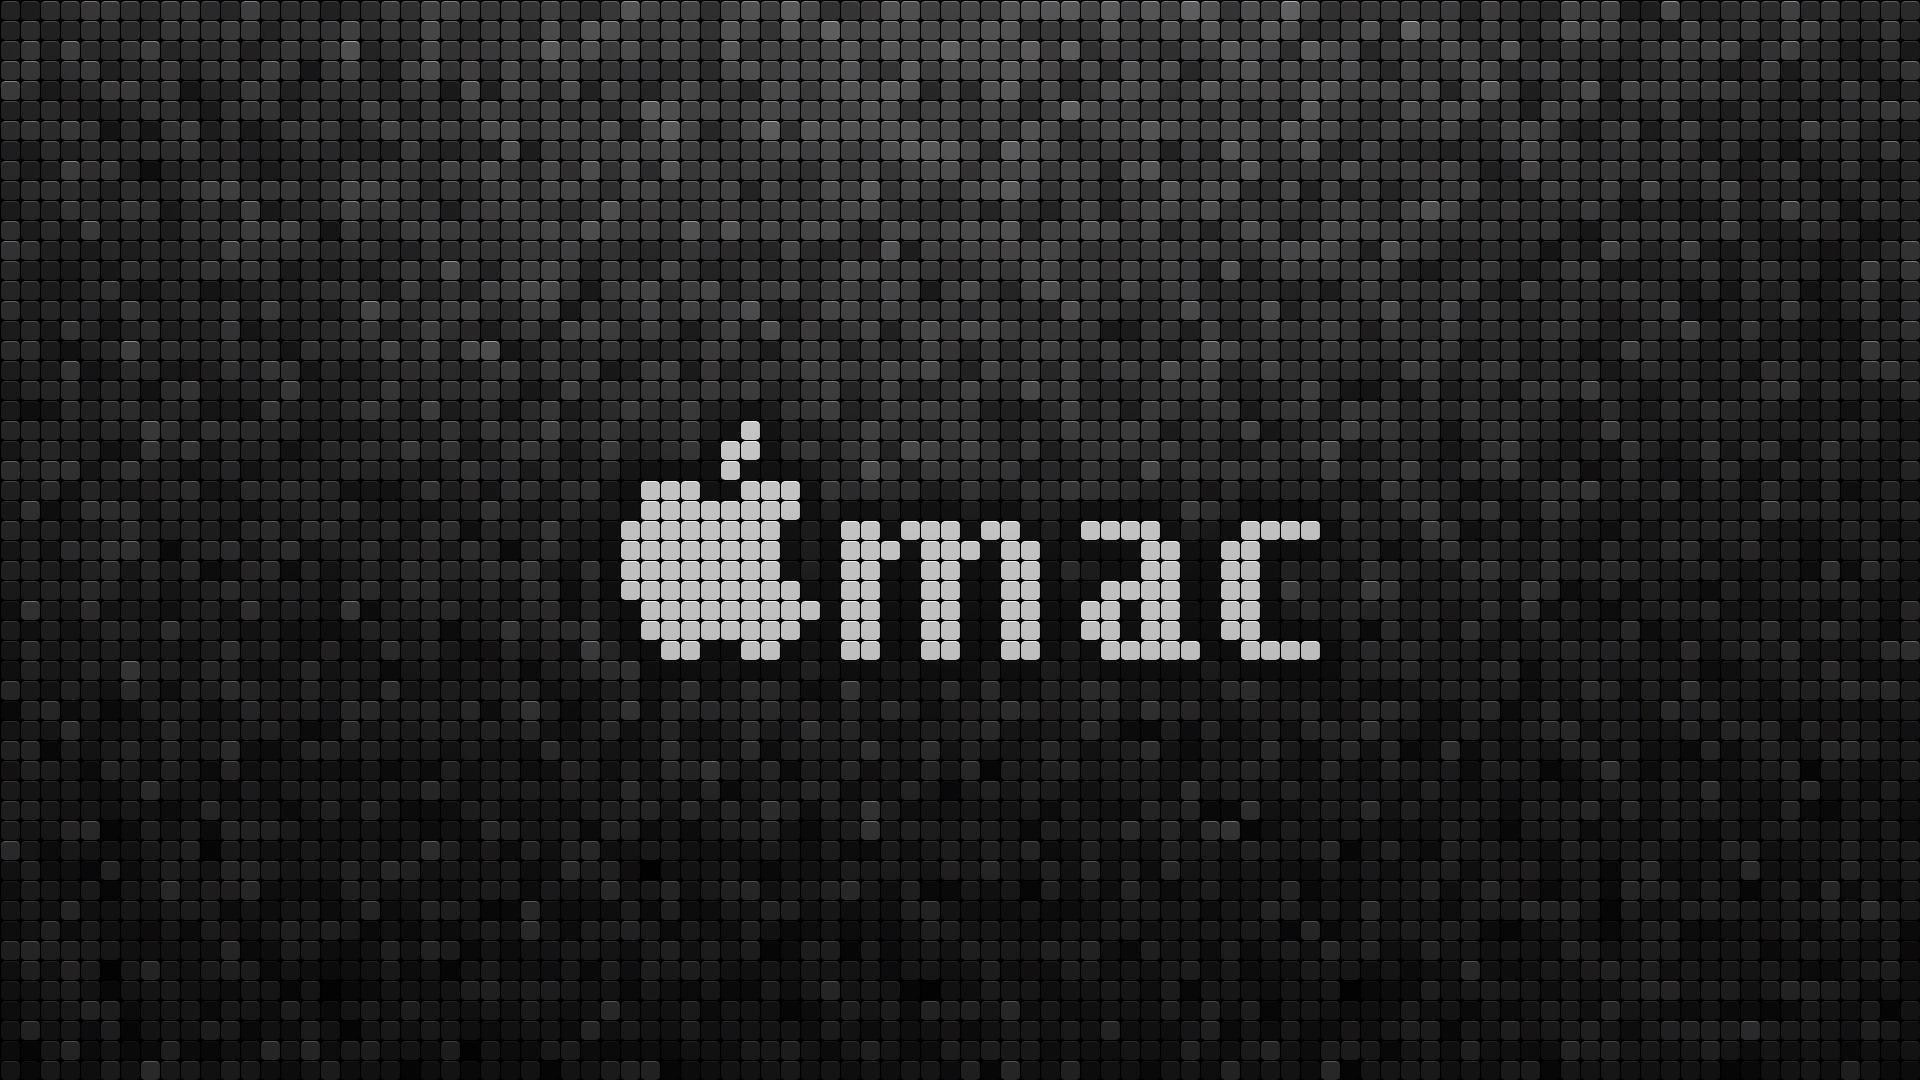 1920x1080 Wallpaper: Mac Os Lion Hd Your Top Wallpapers Id, Best Mac .